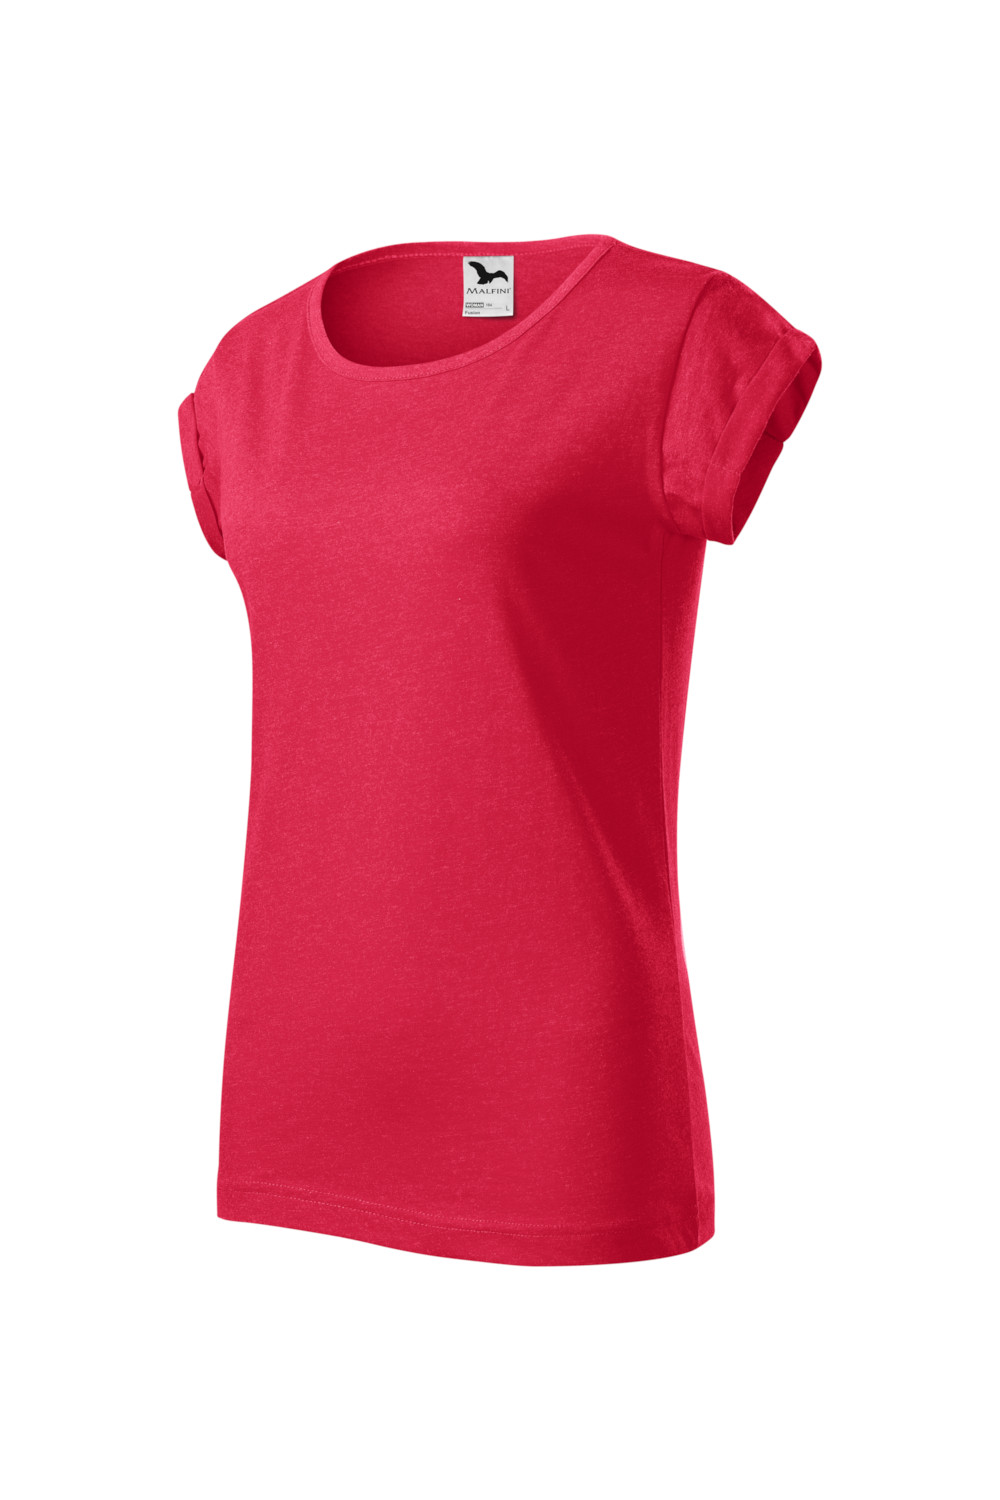 Koszulka damska melanżowa FUSION 164 koszulki / T-shirt czerwony melanż M7